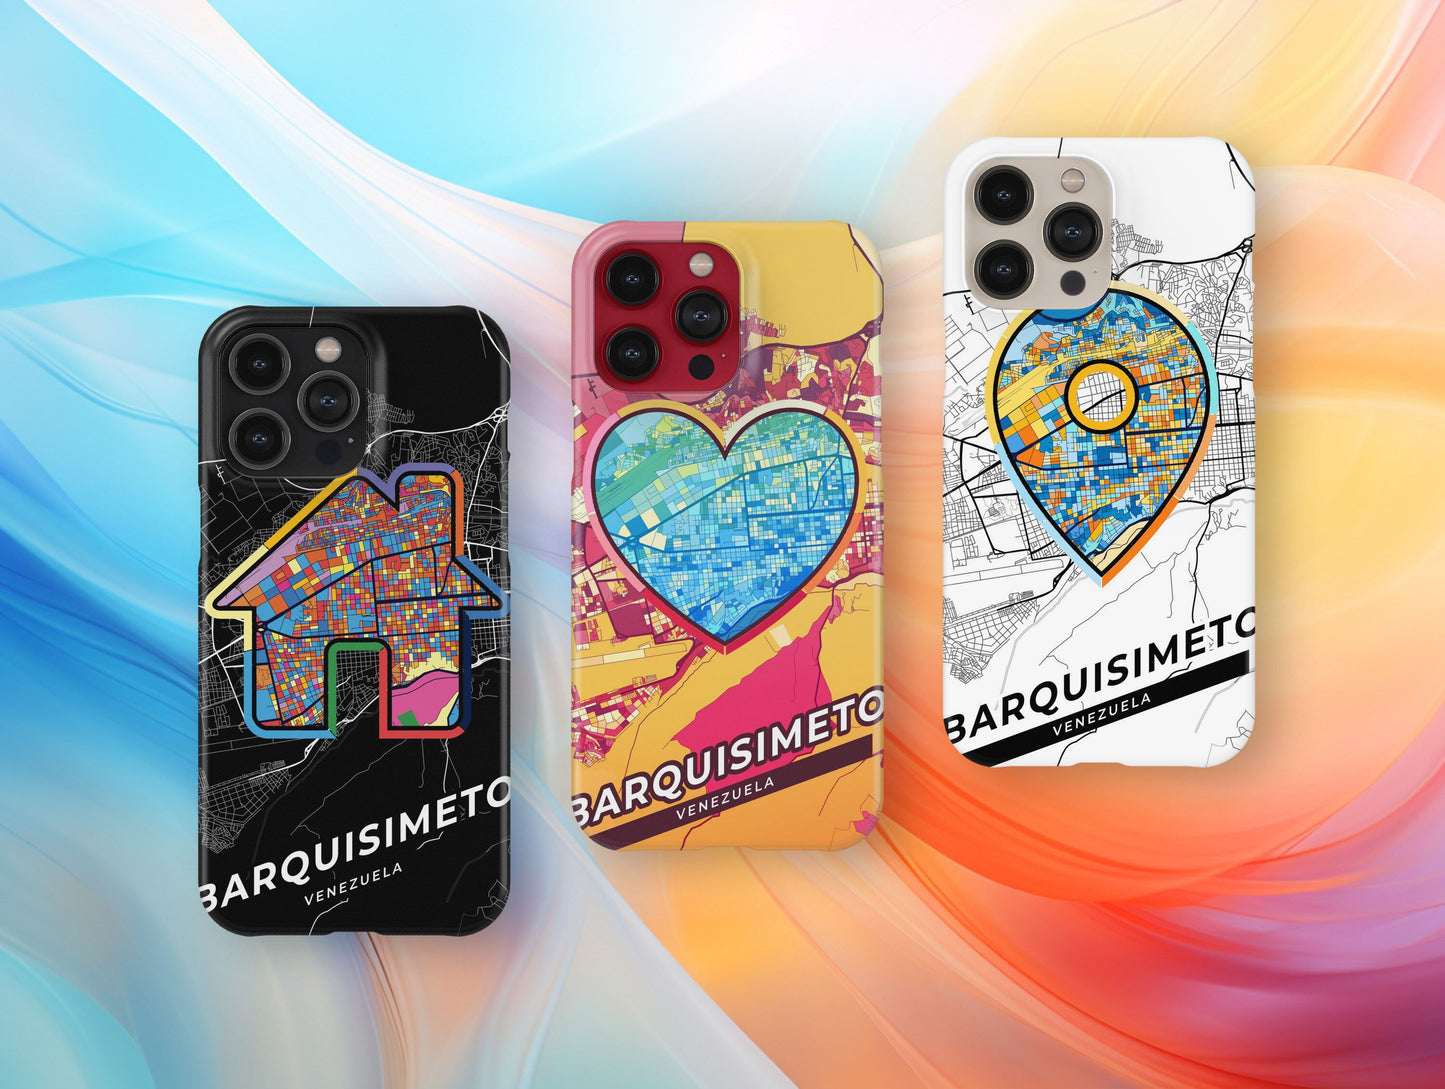 Barquisimeto Venezuela slim phone case with colorful icon. Birthday, wedding or housewarming gift. Couple match cases.